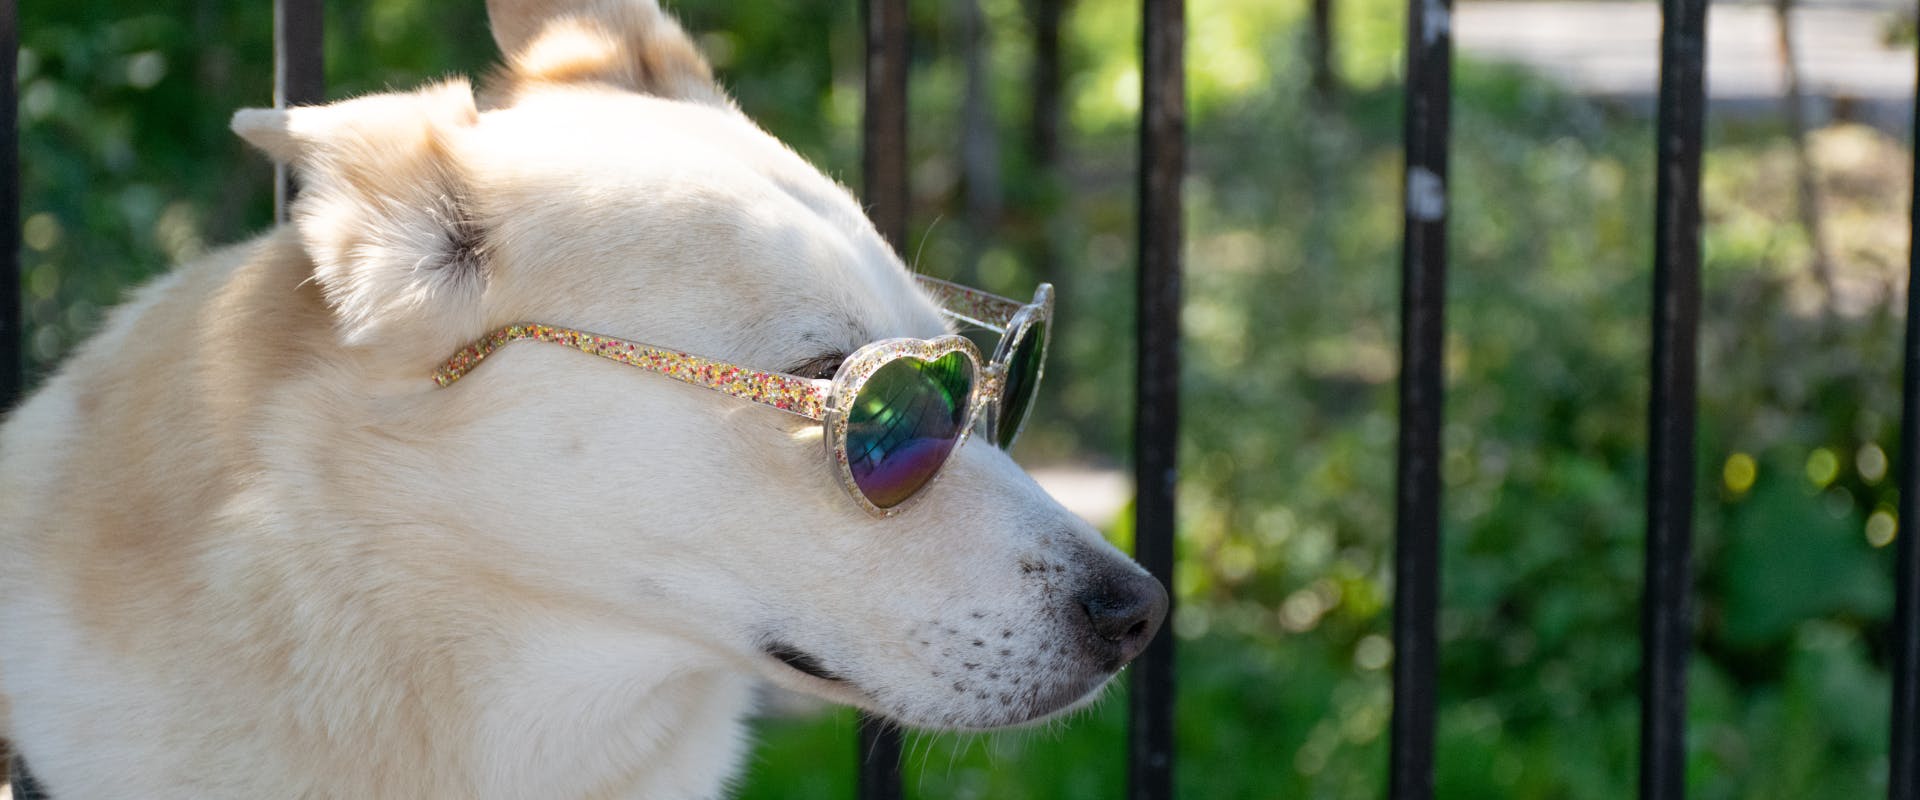 A dog wearing sunglasses.